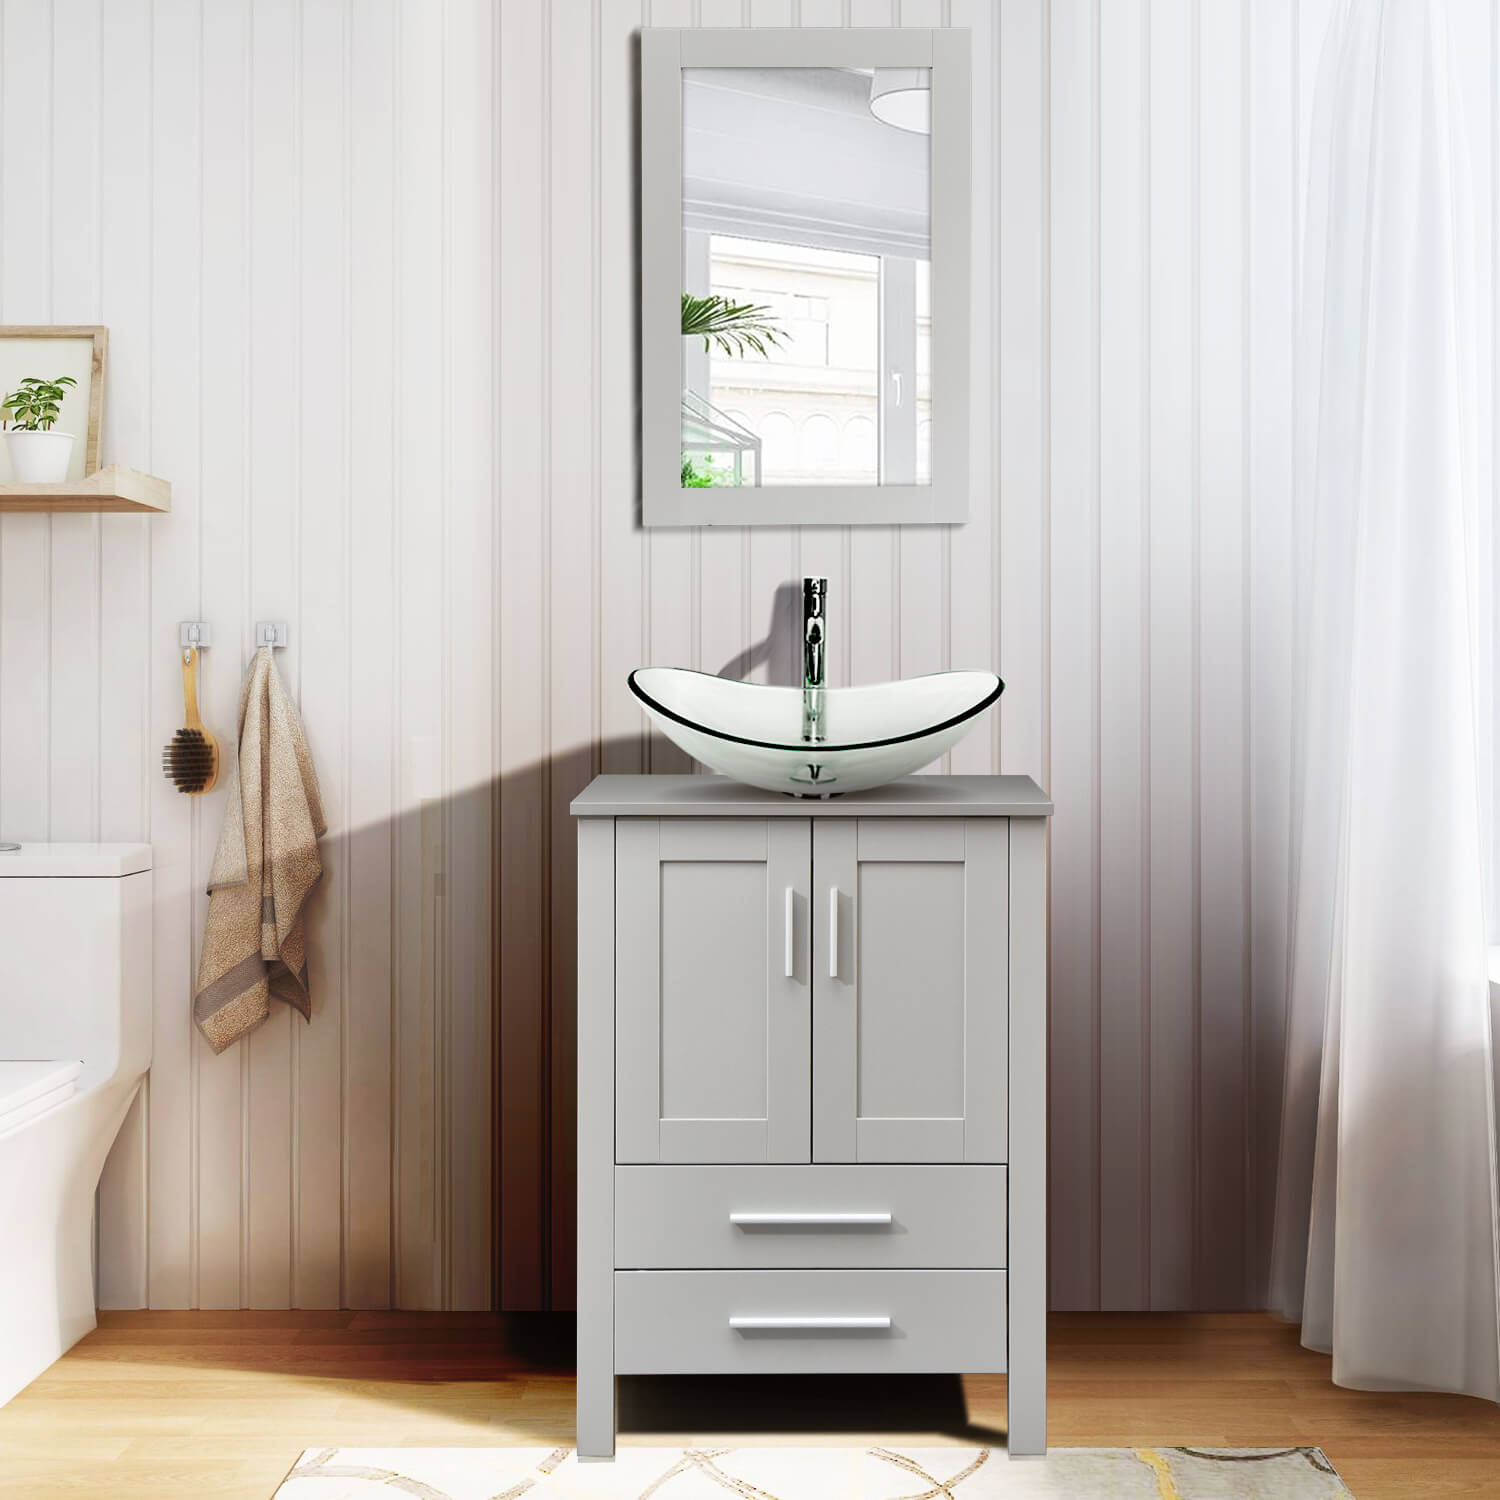 Elecwish gray wood bathroom vanity with boat clear sink BG007 in bathroom